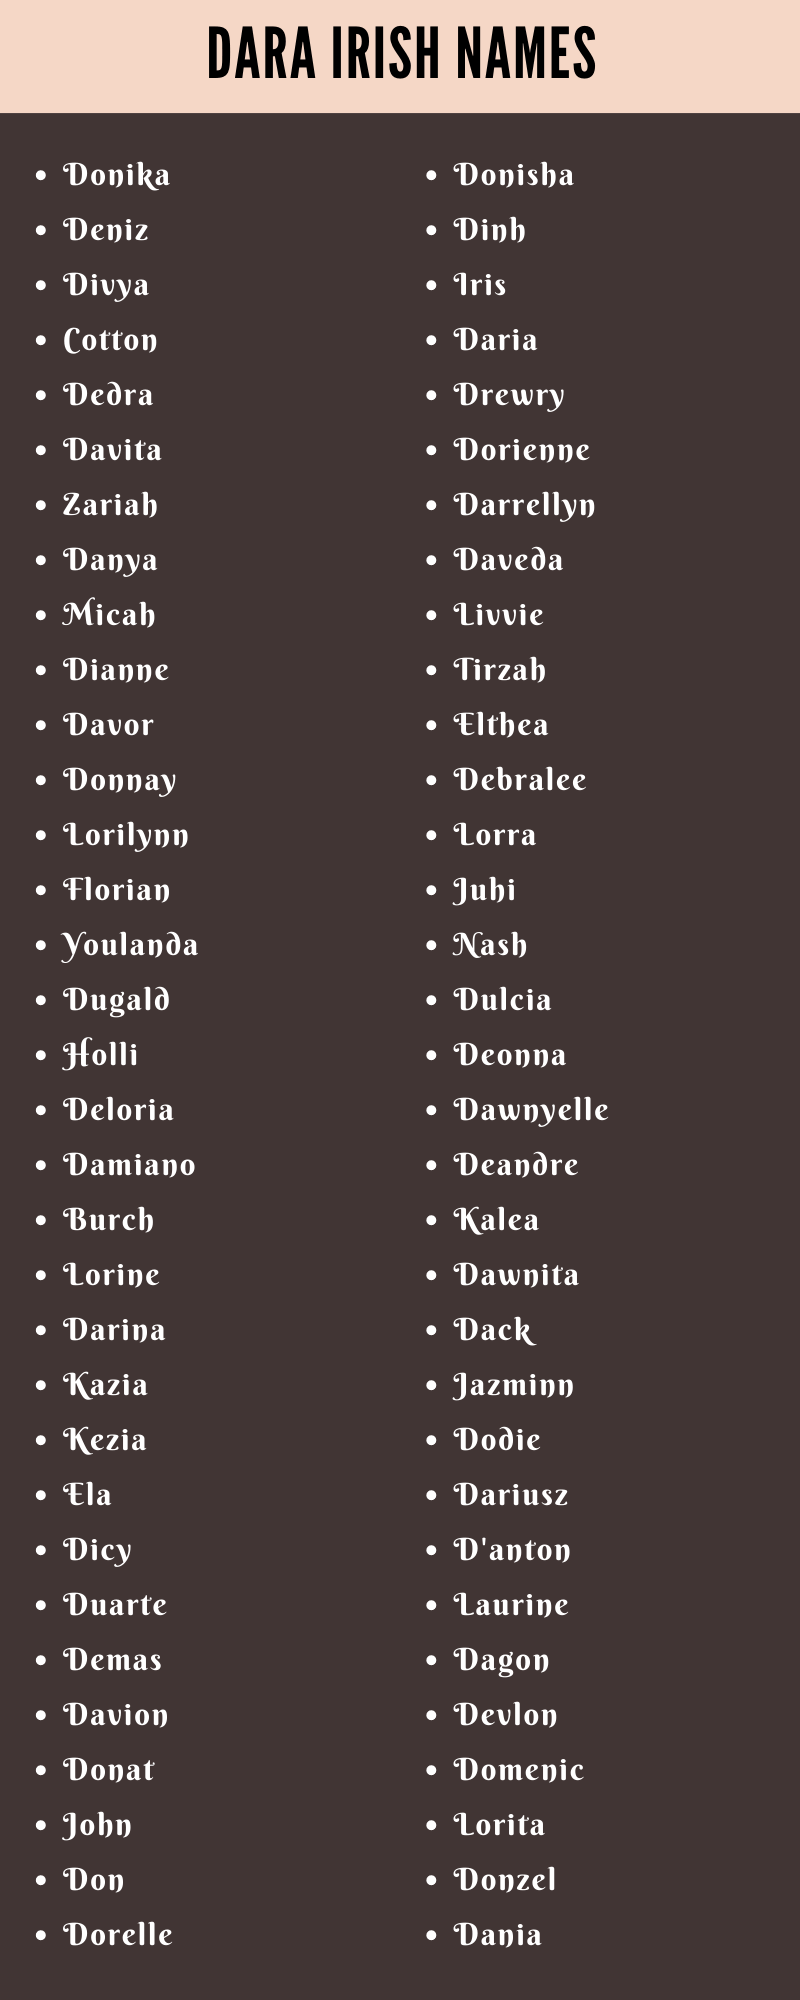 Dara Irish Names